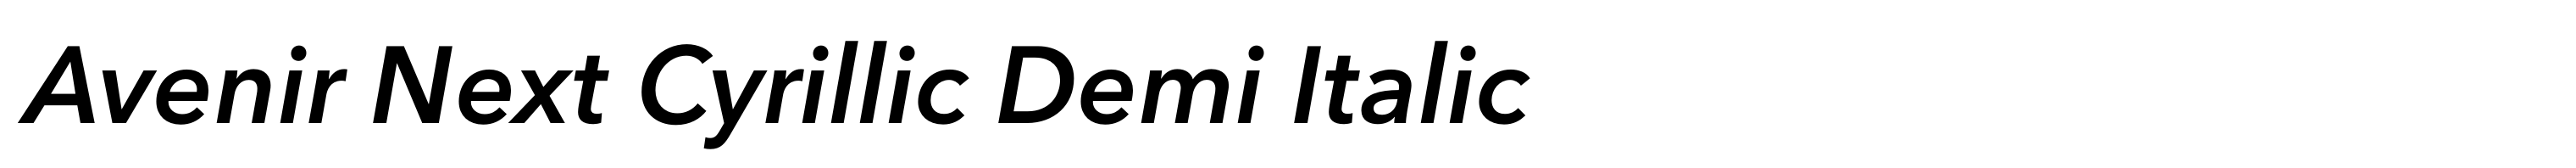 Avenir Next Cyrillic Demi Italic